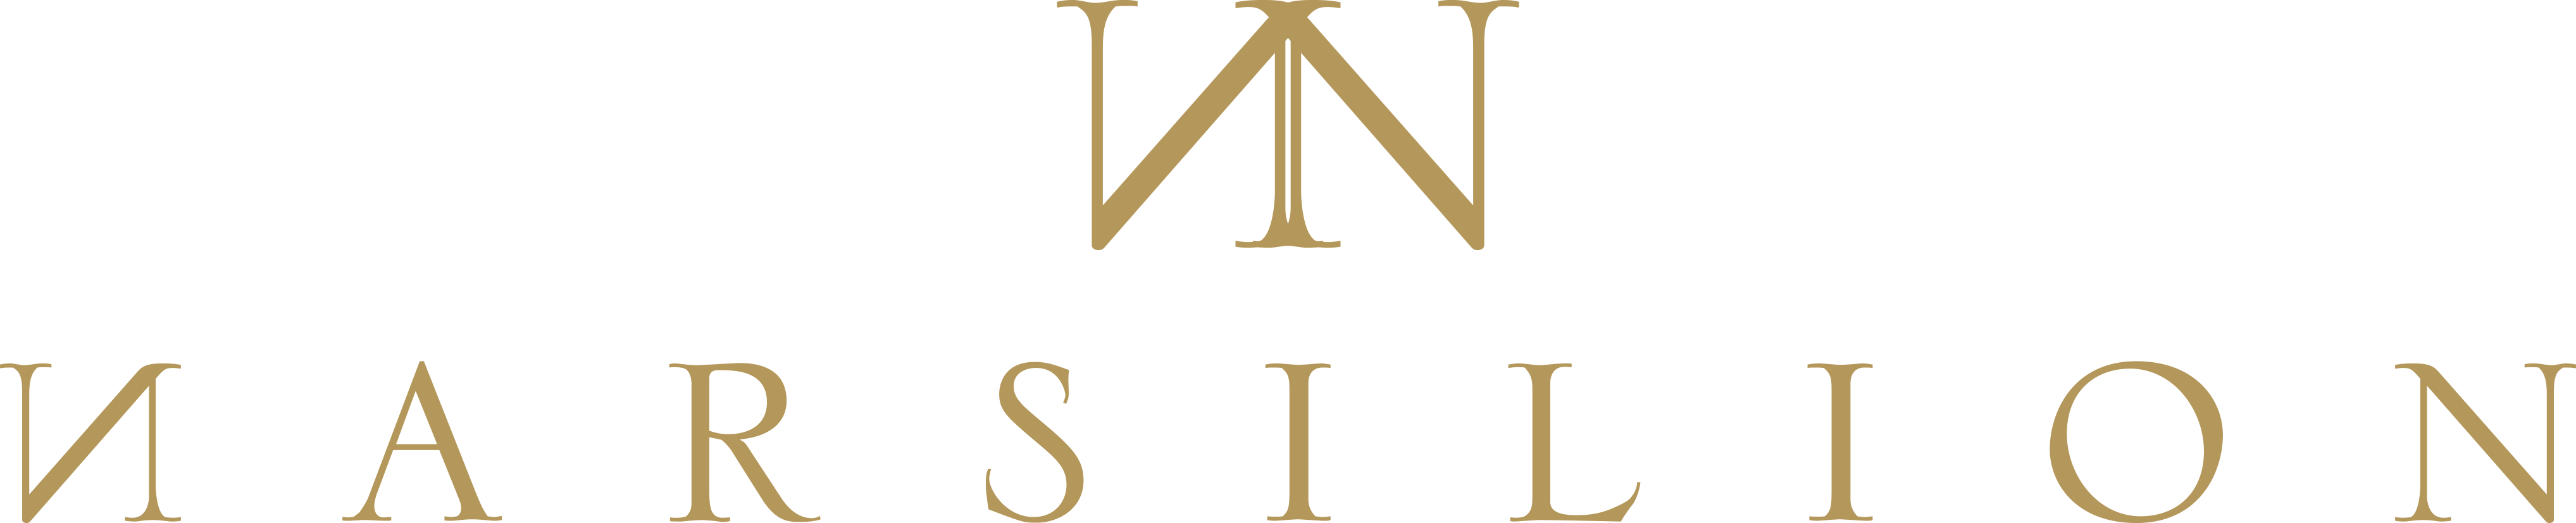 logo-COMPLETO_ottone.png